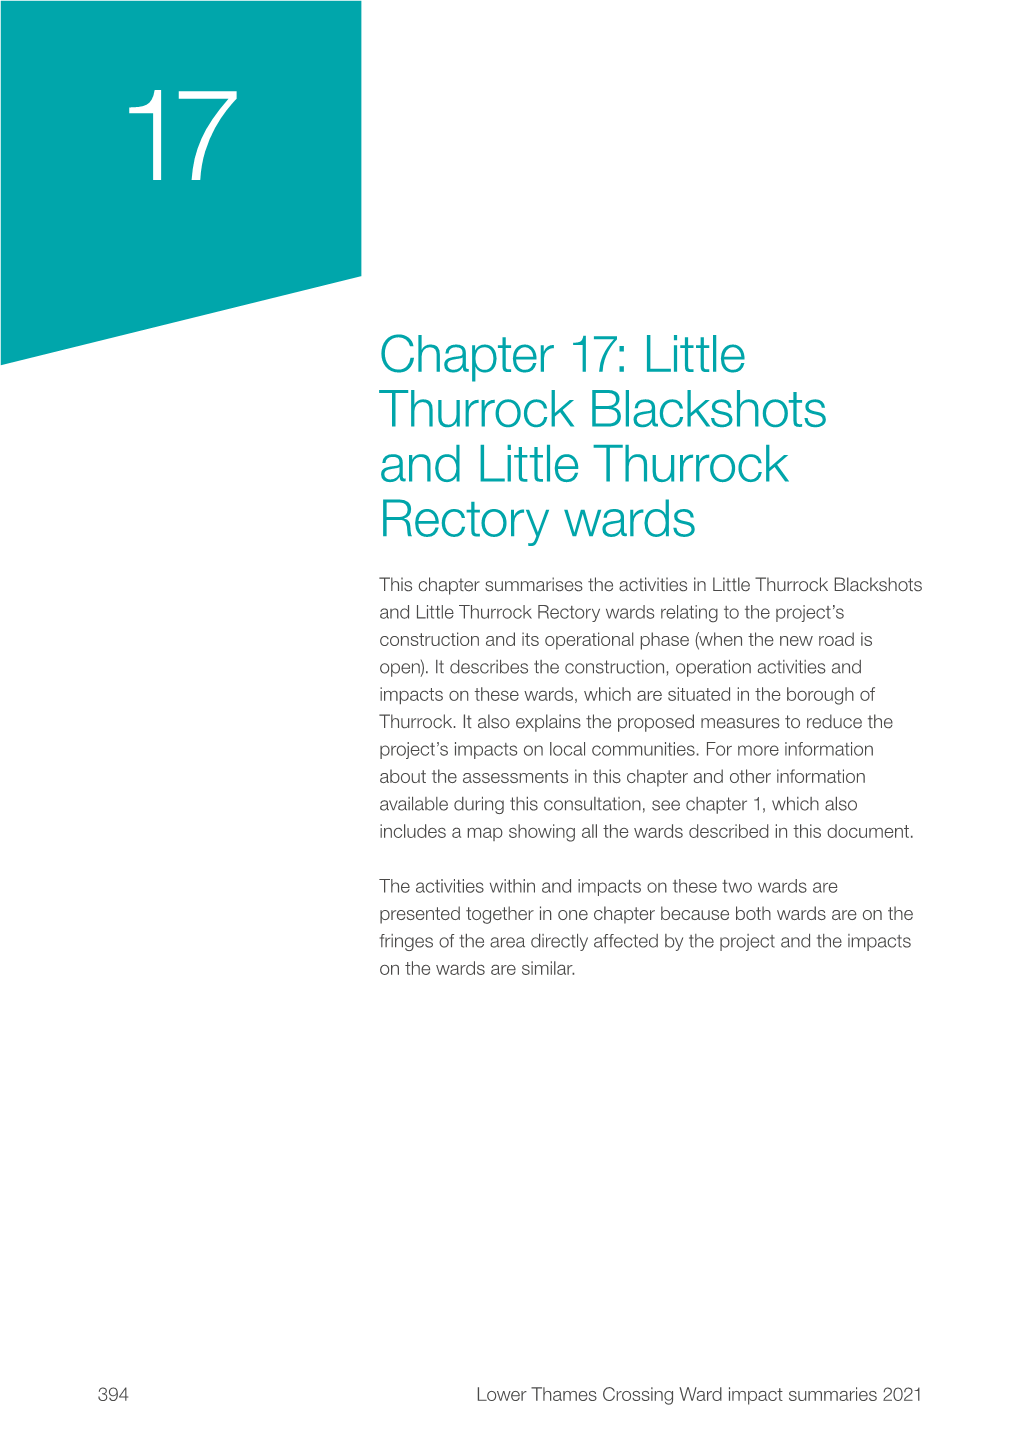 Little Thurrock Blackshots and Little Thurrock Rectory Wards